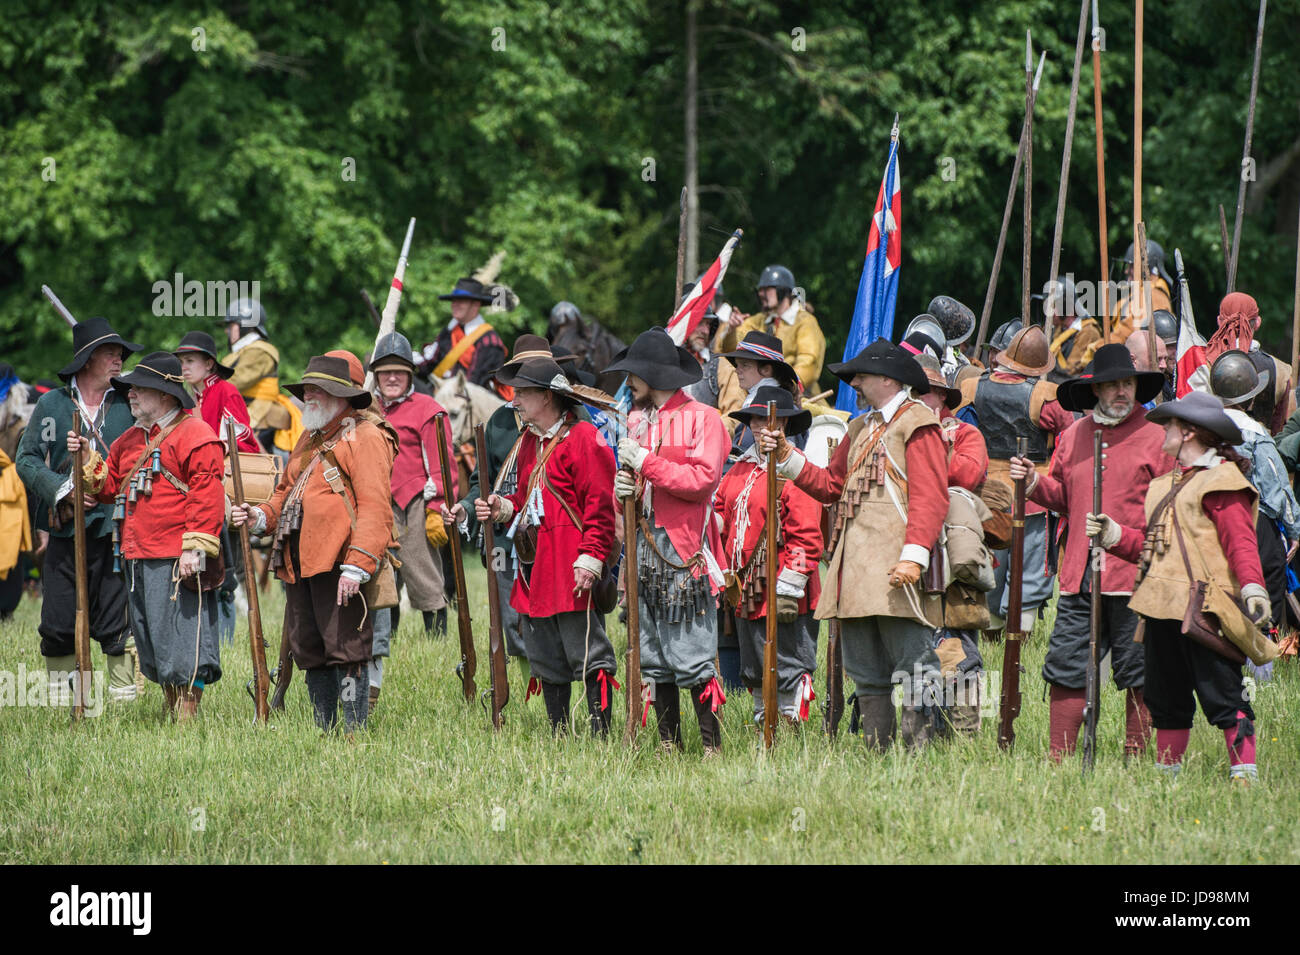 Parliamentarian musketeers preparing for battle at a Sealed Knot English Civil war reenactment event. Charlton park, Malmesbury, Wiltshire, UK. Stock Photo